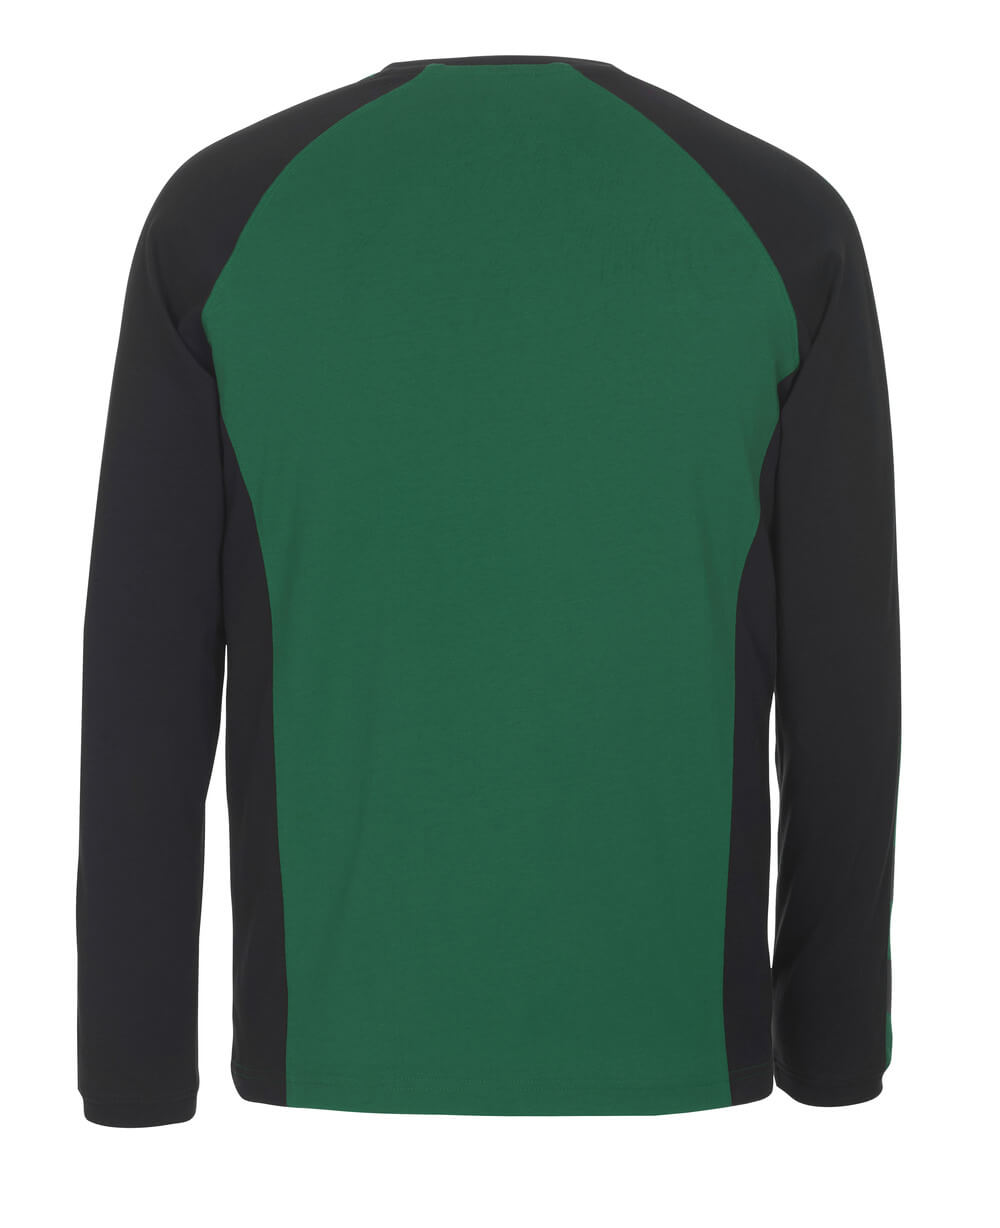 Mascot UNIQUE  Bielefeld T-shirt, long-sleeved 50568 green/black